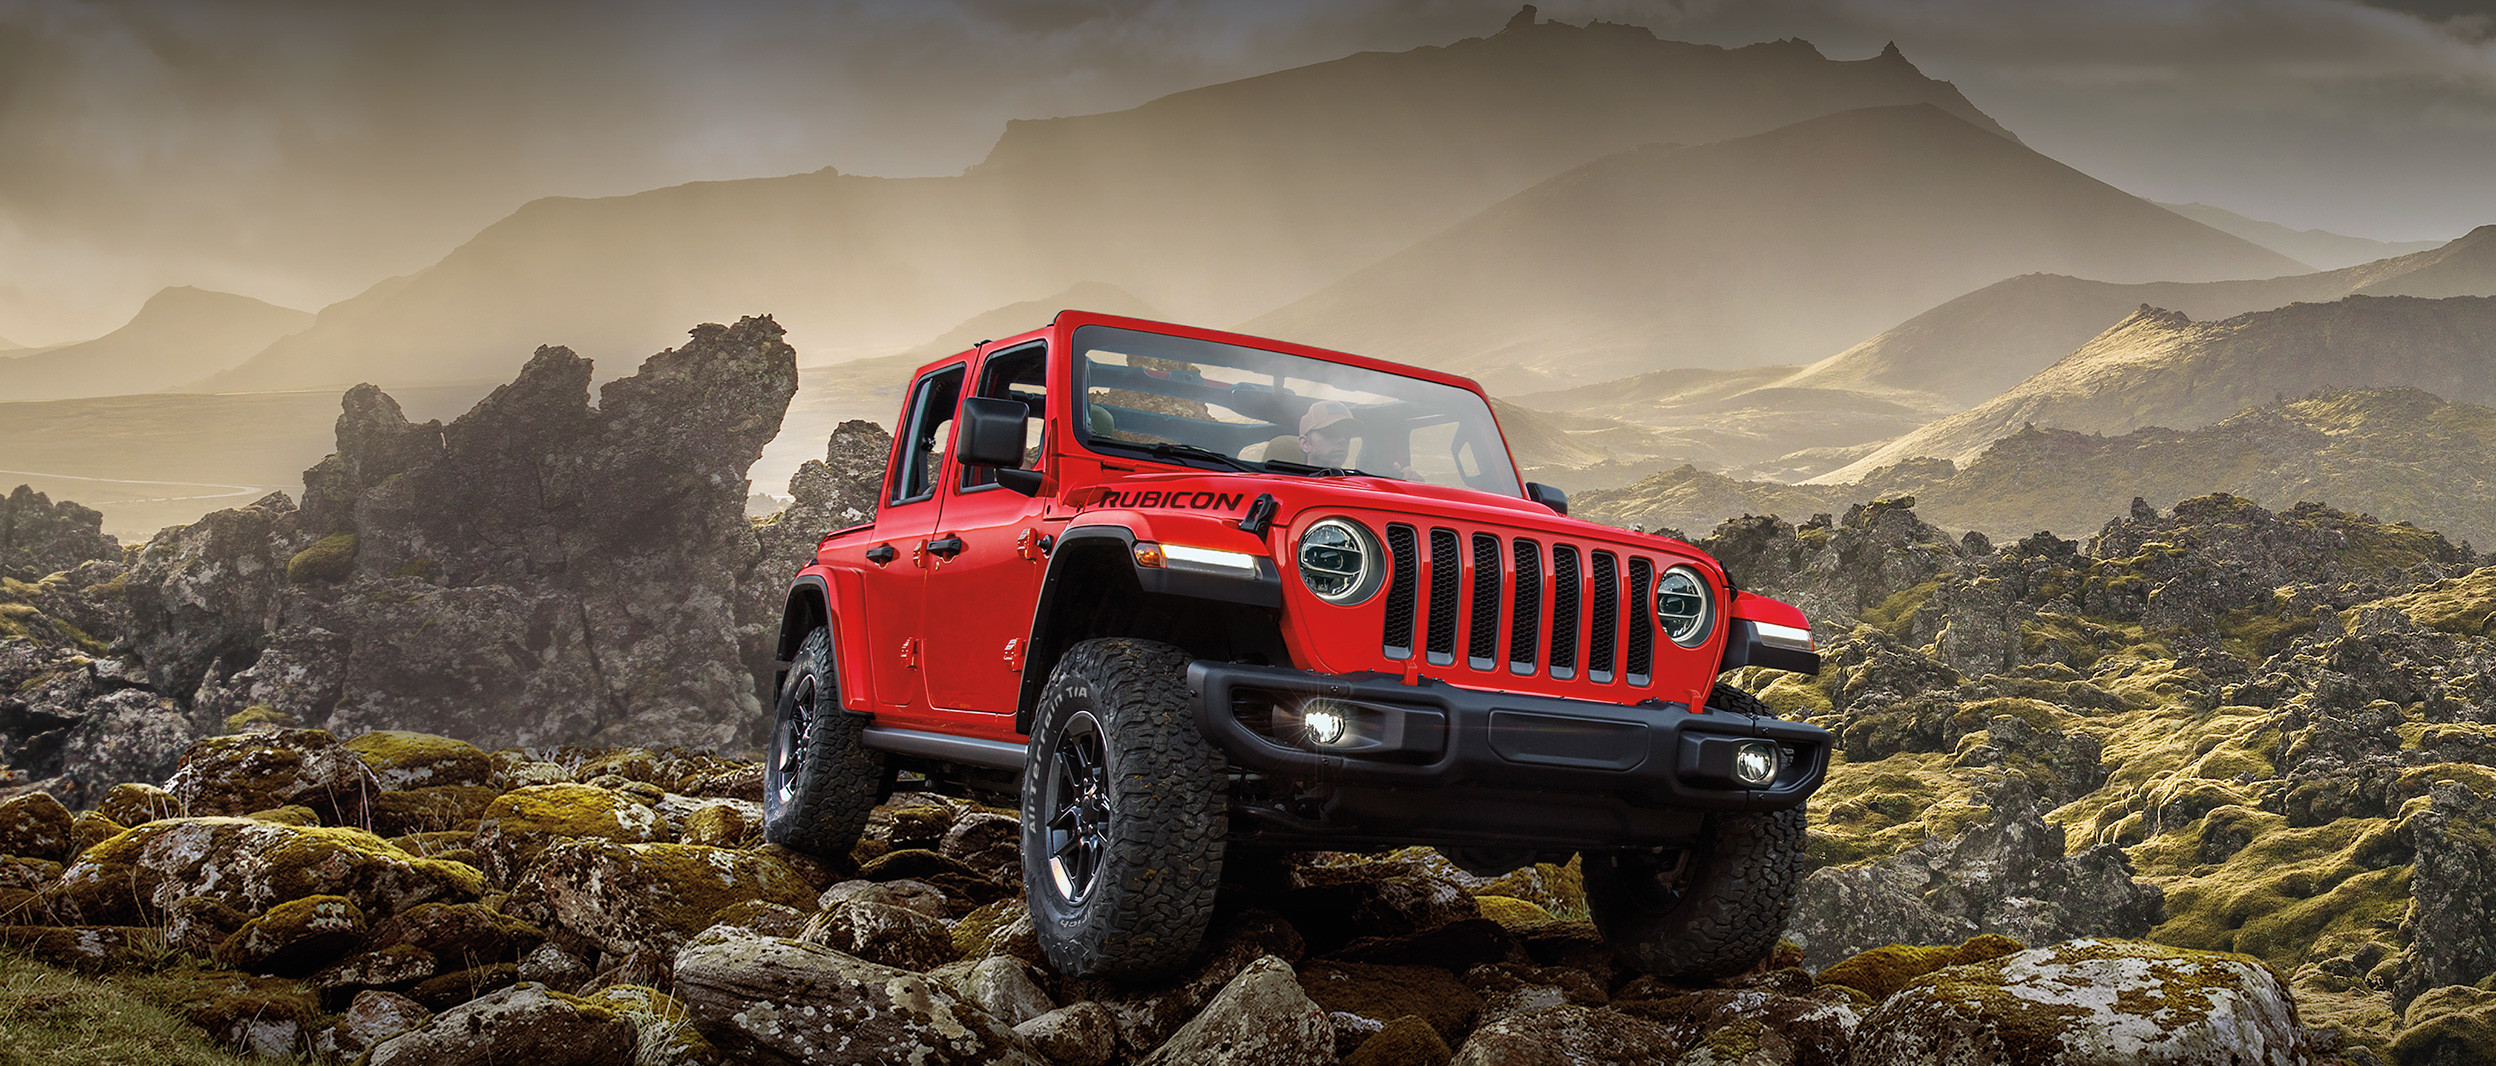 A red Jeep Wrangler driving through rocky terrain